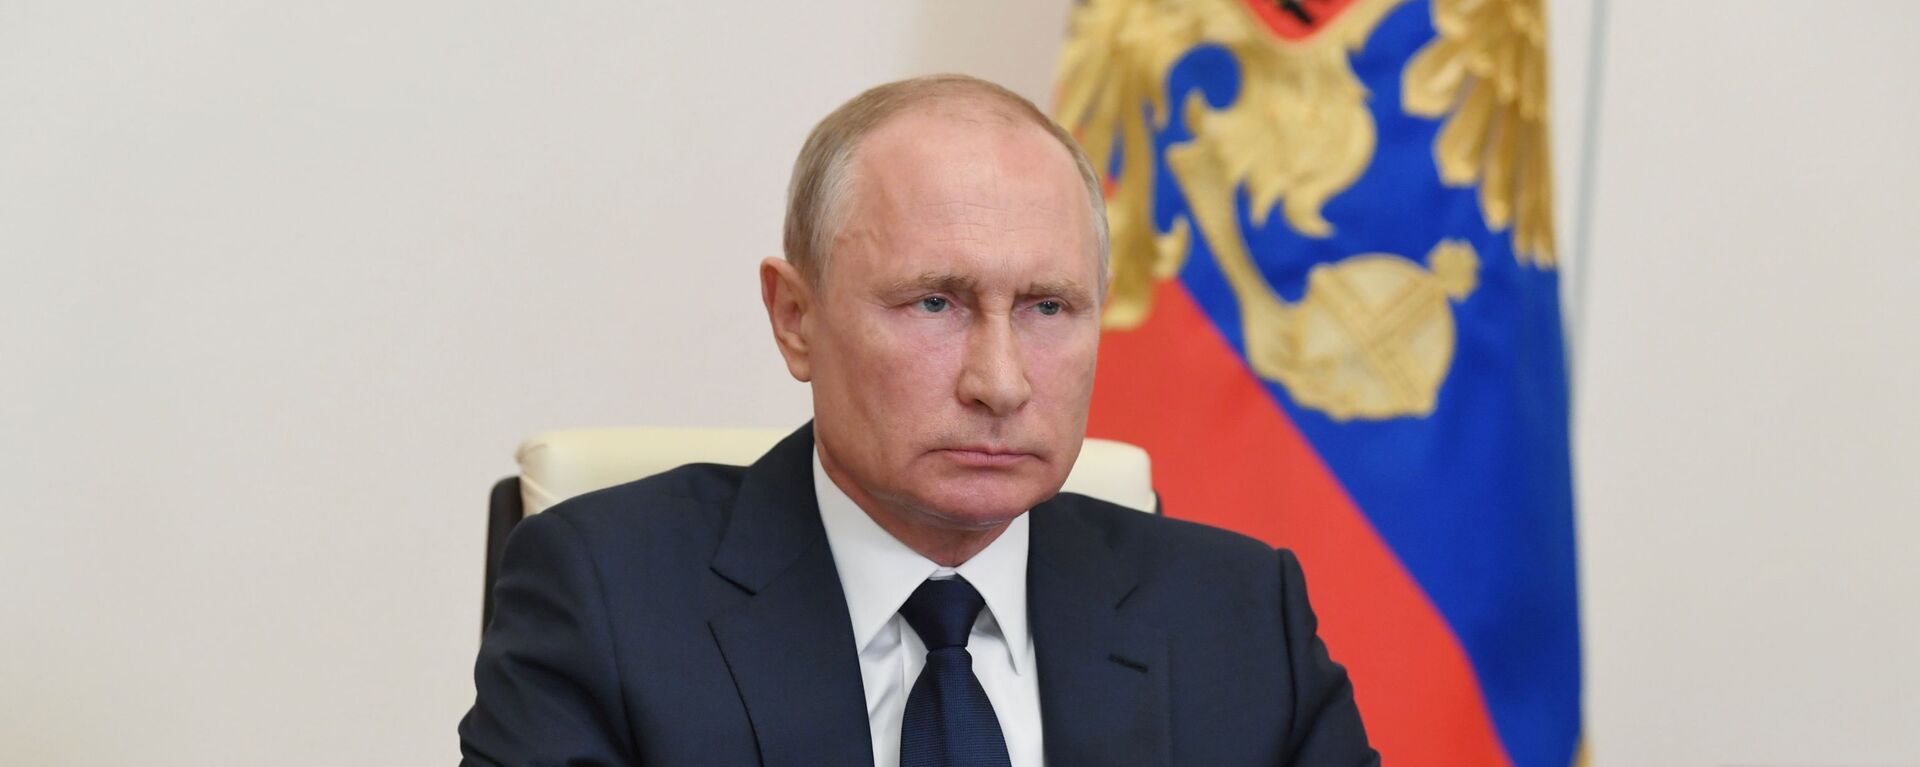 Predsednik Rusije Vladimir Putin - Sputnik Srbija, 1920, 26.12.2021